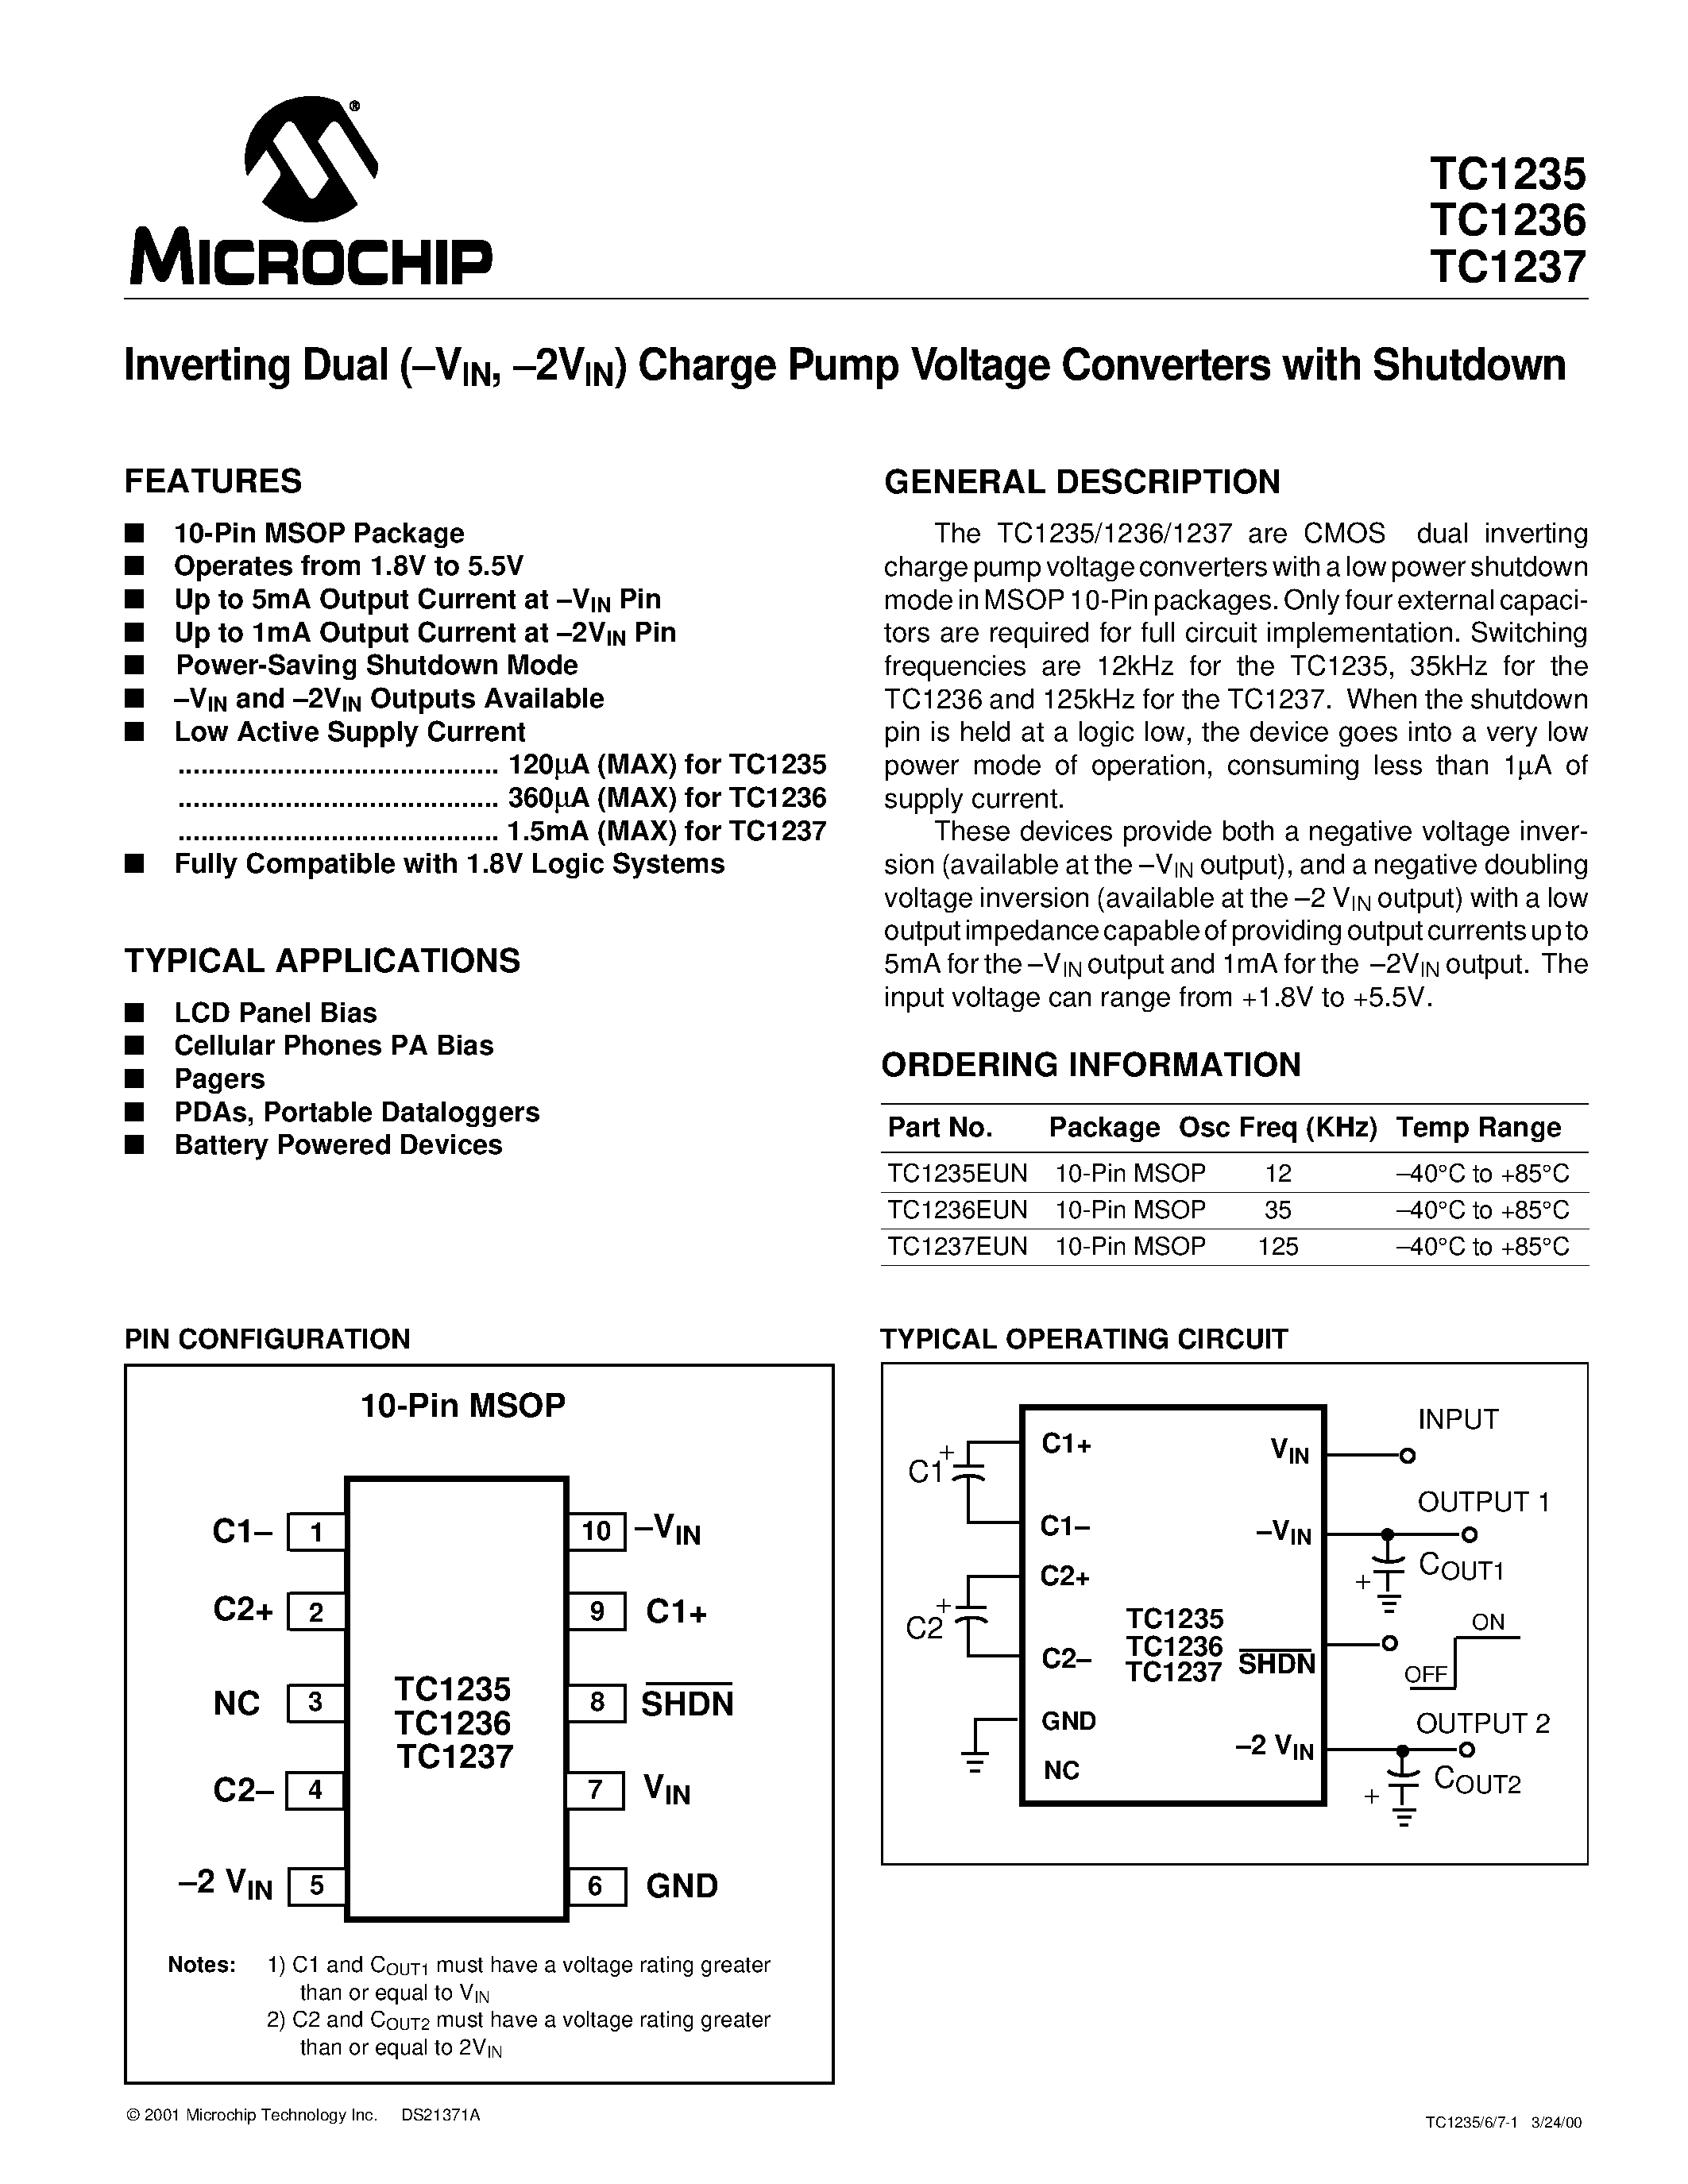 Даташит TC1235 - (TC1235 / TC1236 / TC1237) Inverting Dual Charge Pump Voltage Converters with Shutdown страница 1